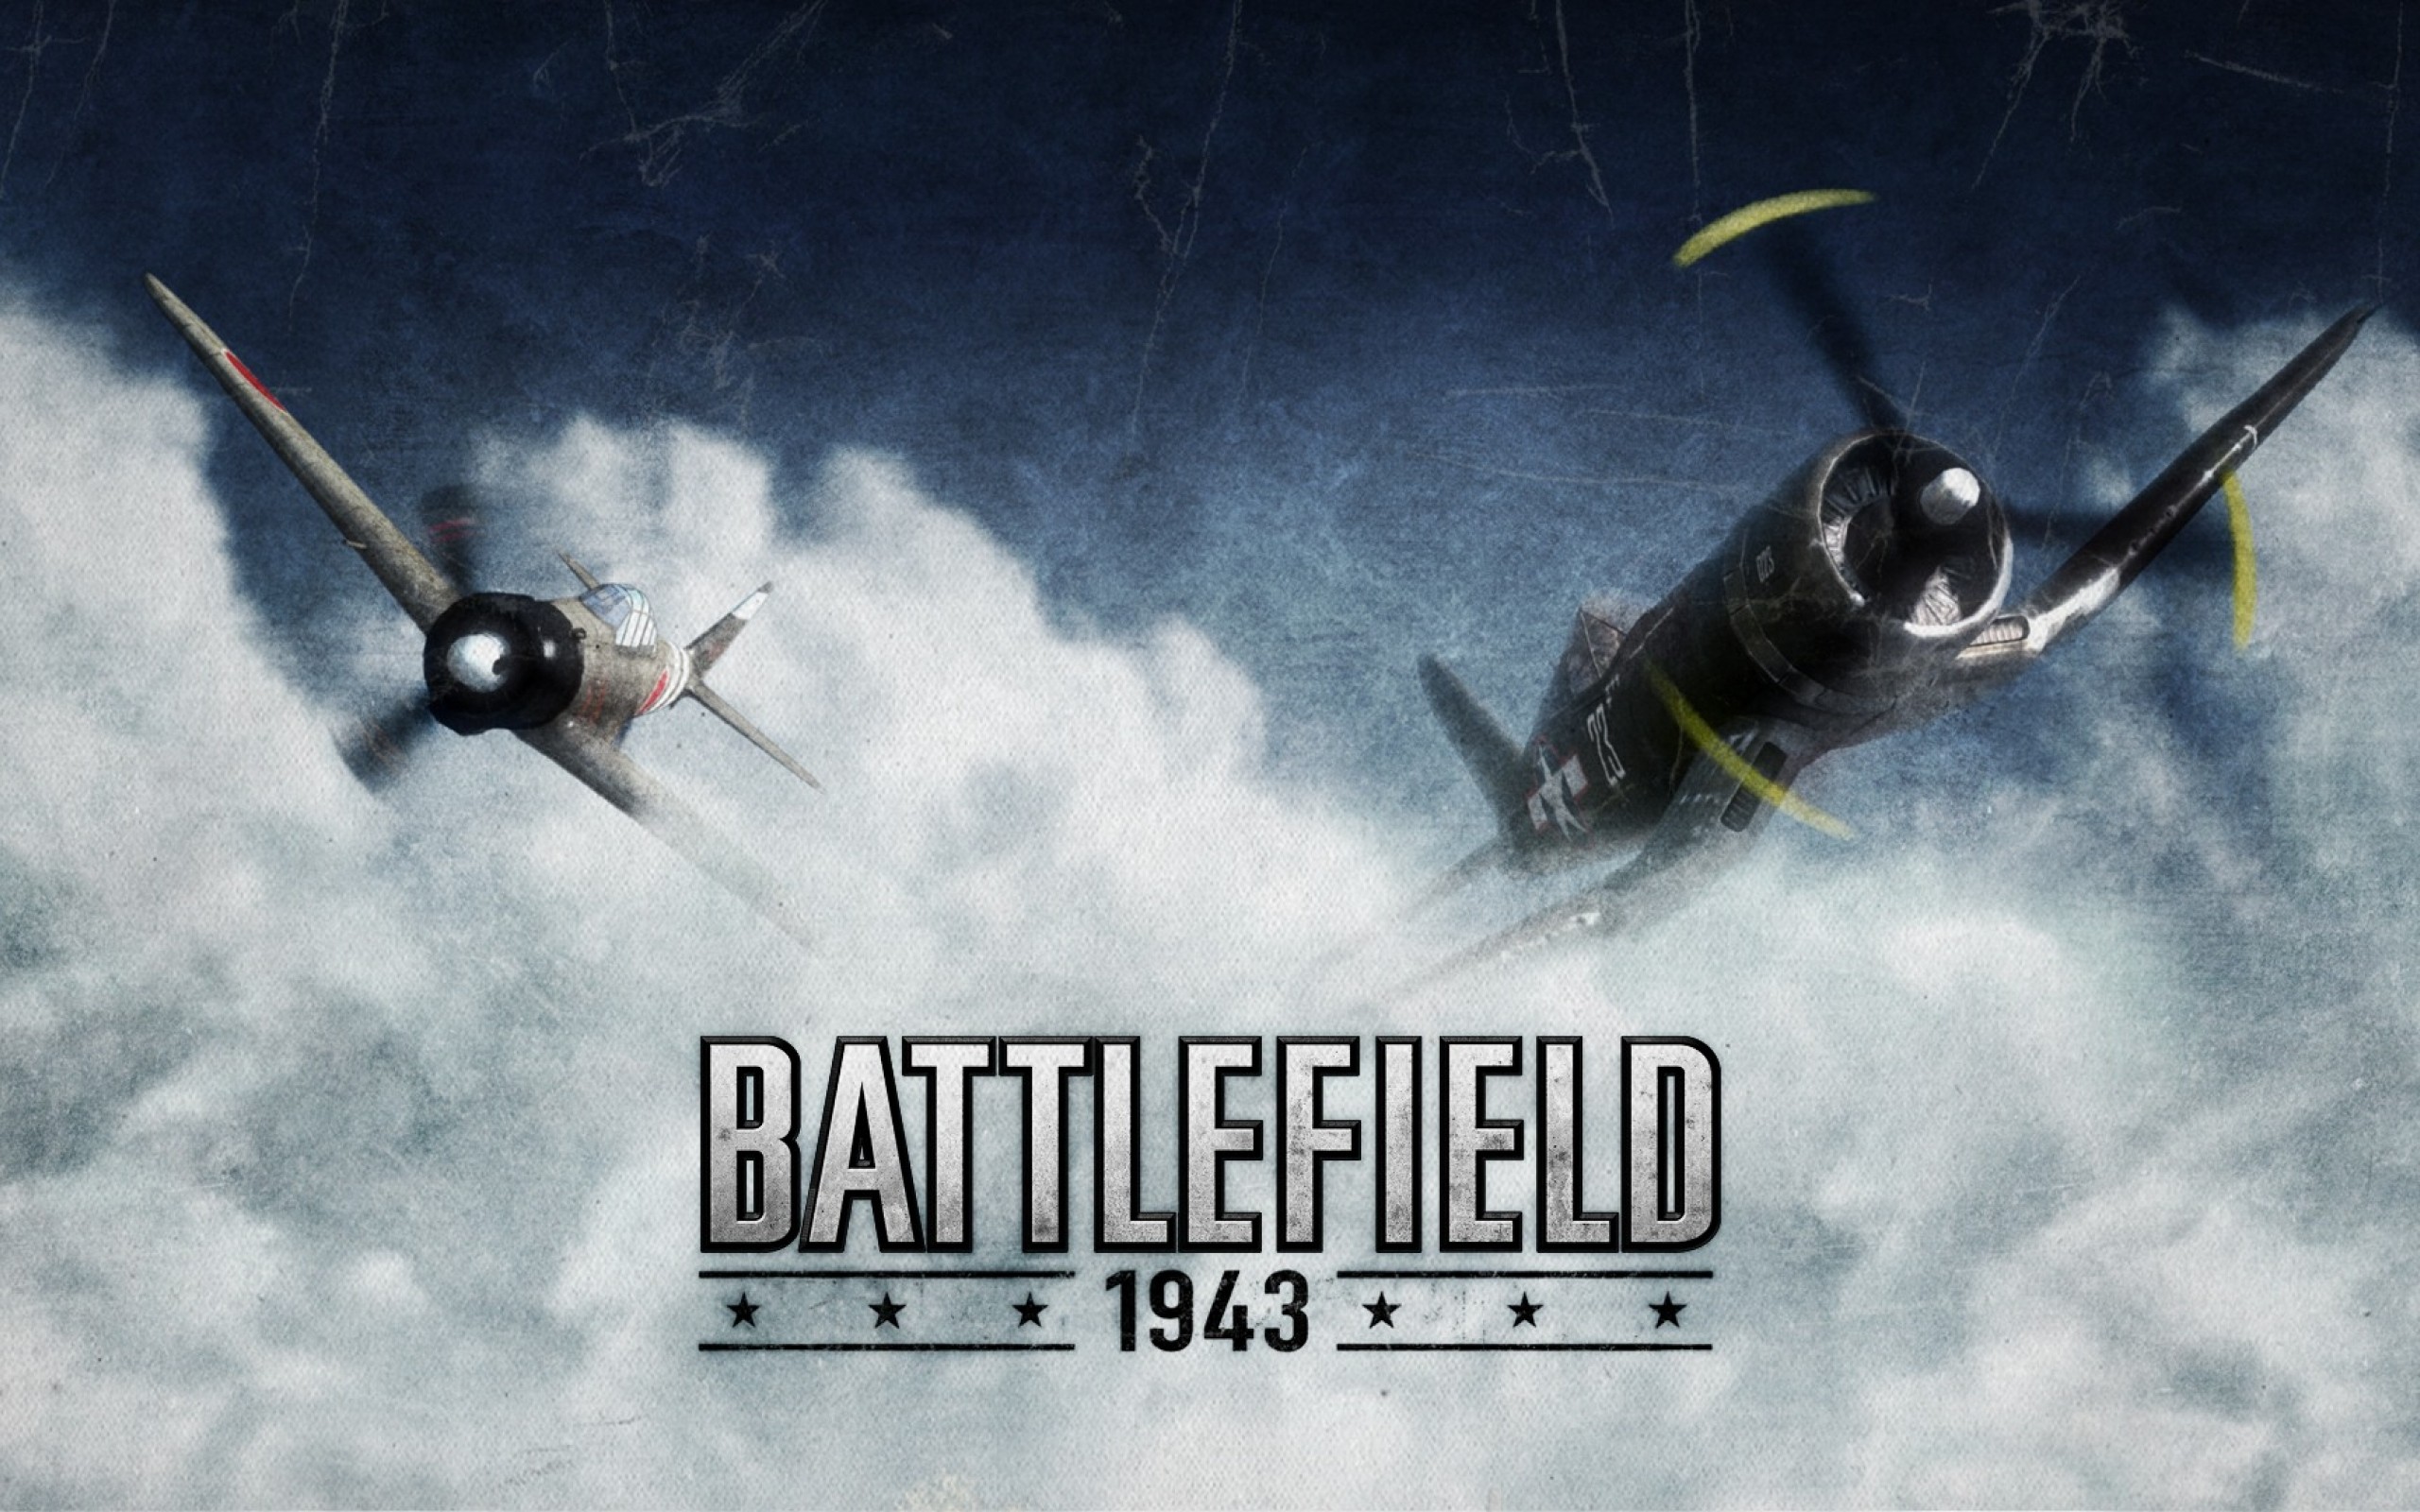 Battlefield 1943 HD Wallpaper Background Image 2560x1600 2560x1600